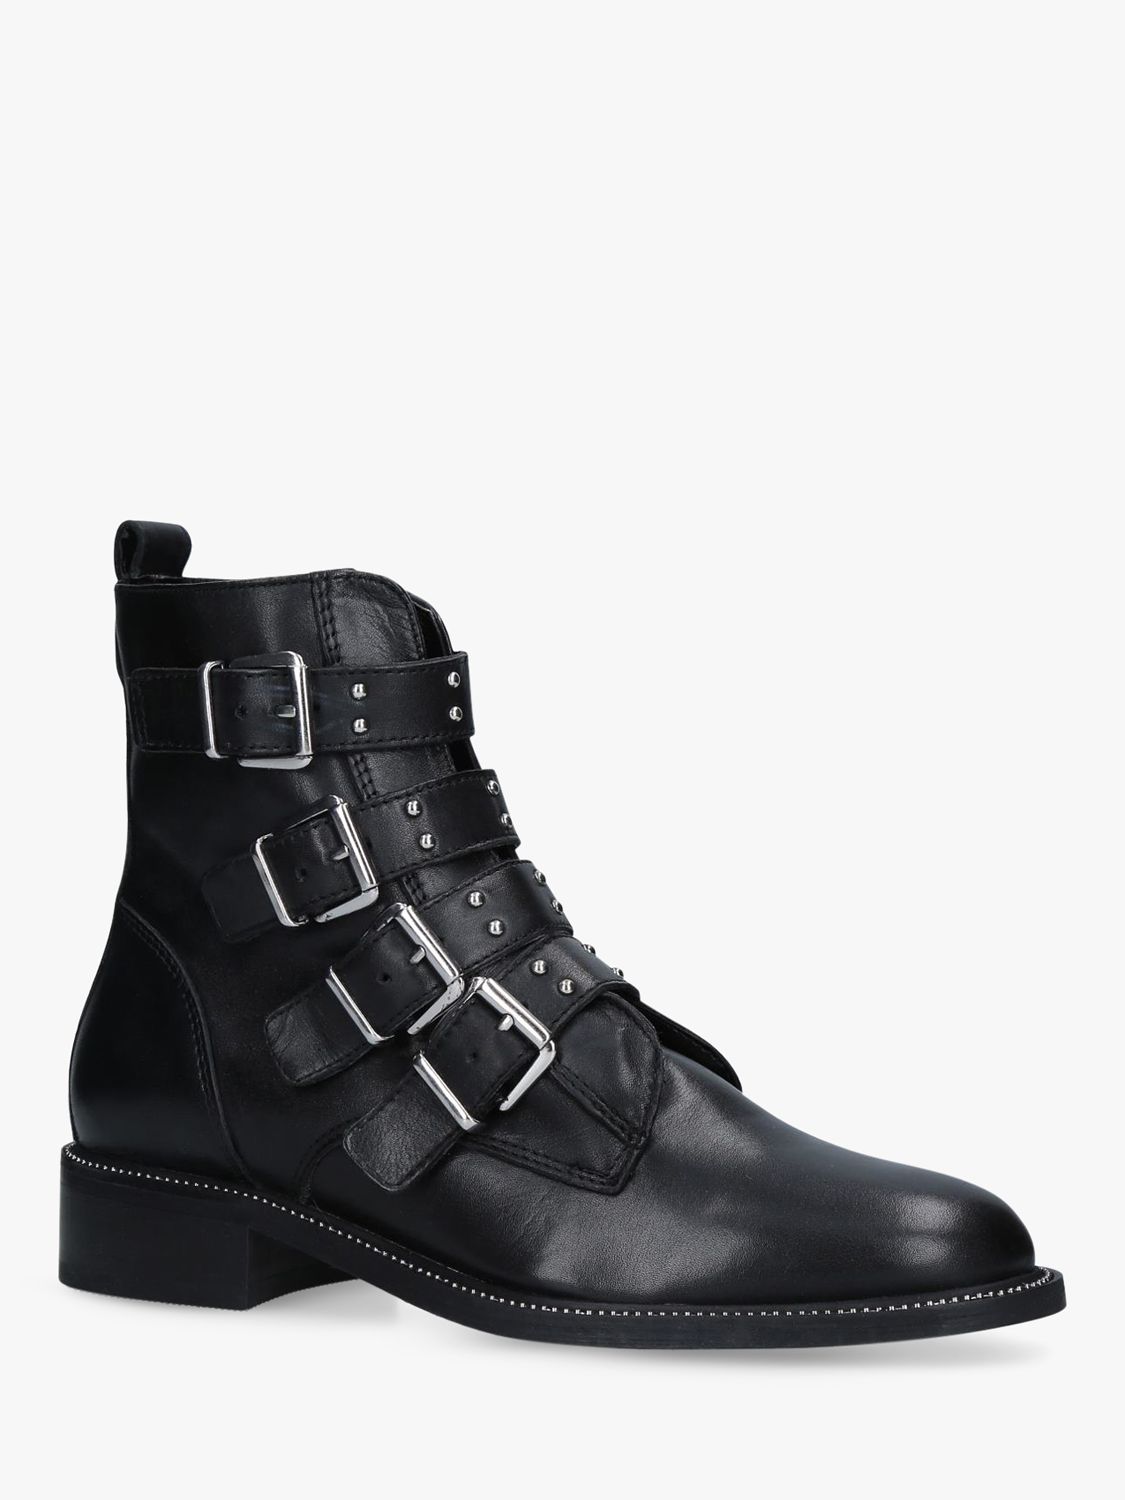 Carvela Strap Buckle Leather Ankle Boots, Black at John Lewis & Partners